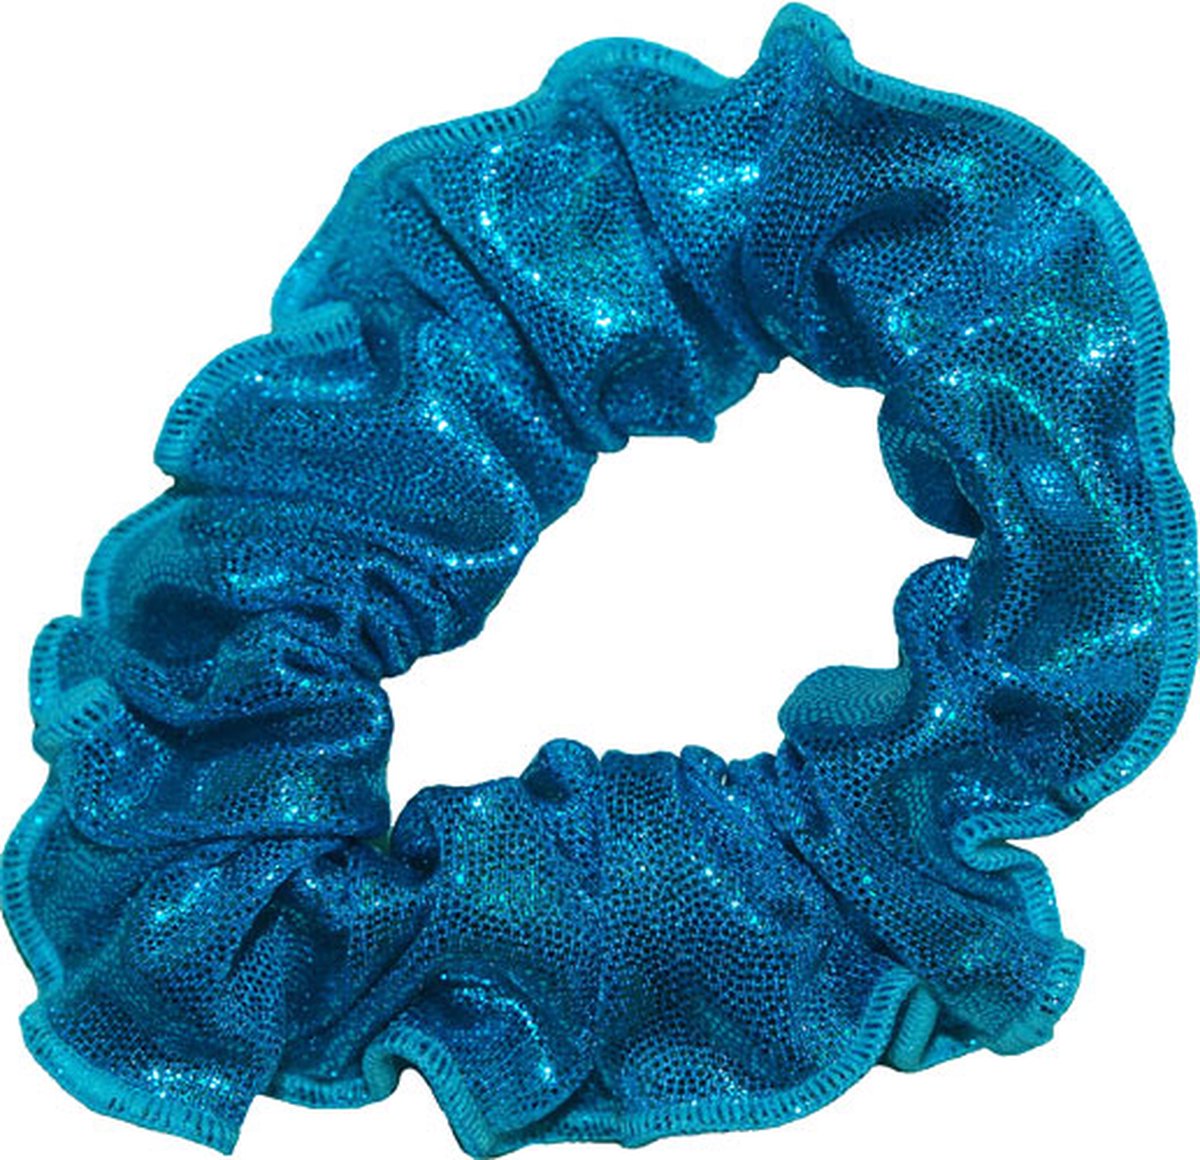 Snowflake - Hair Scrunchie - Mystique Glansstof - Turnen - Meisjes - Haarwokkel - Elastisch - Turquoise - One Size